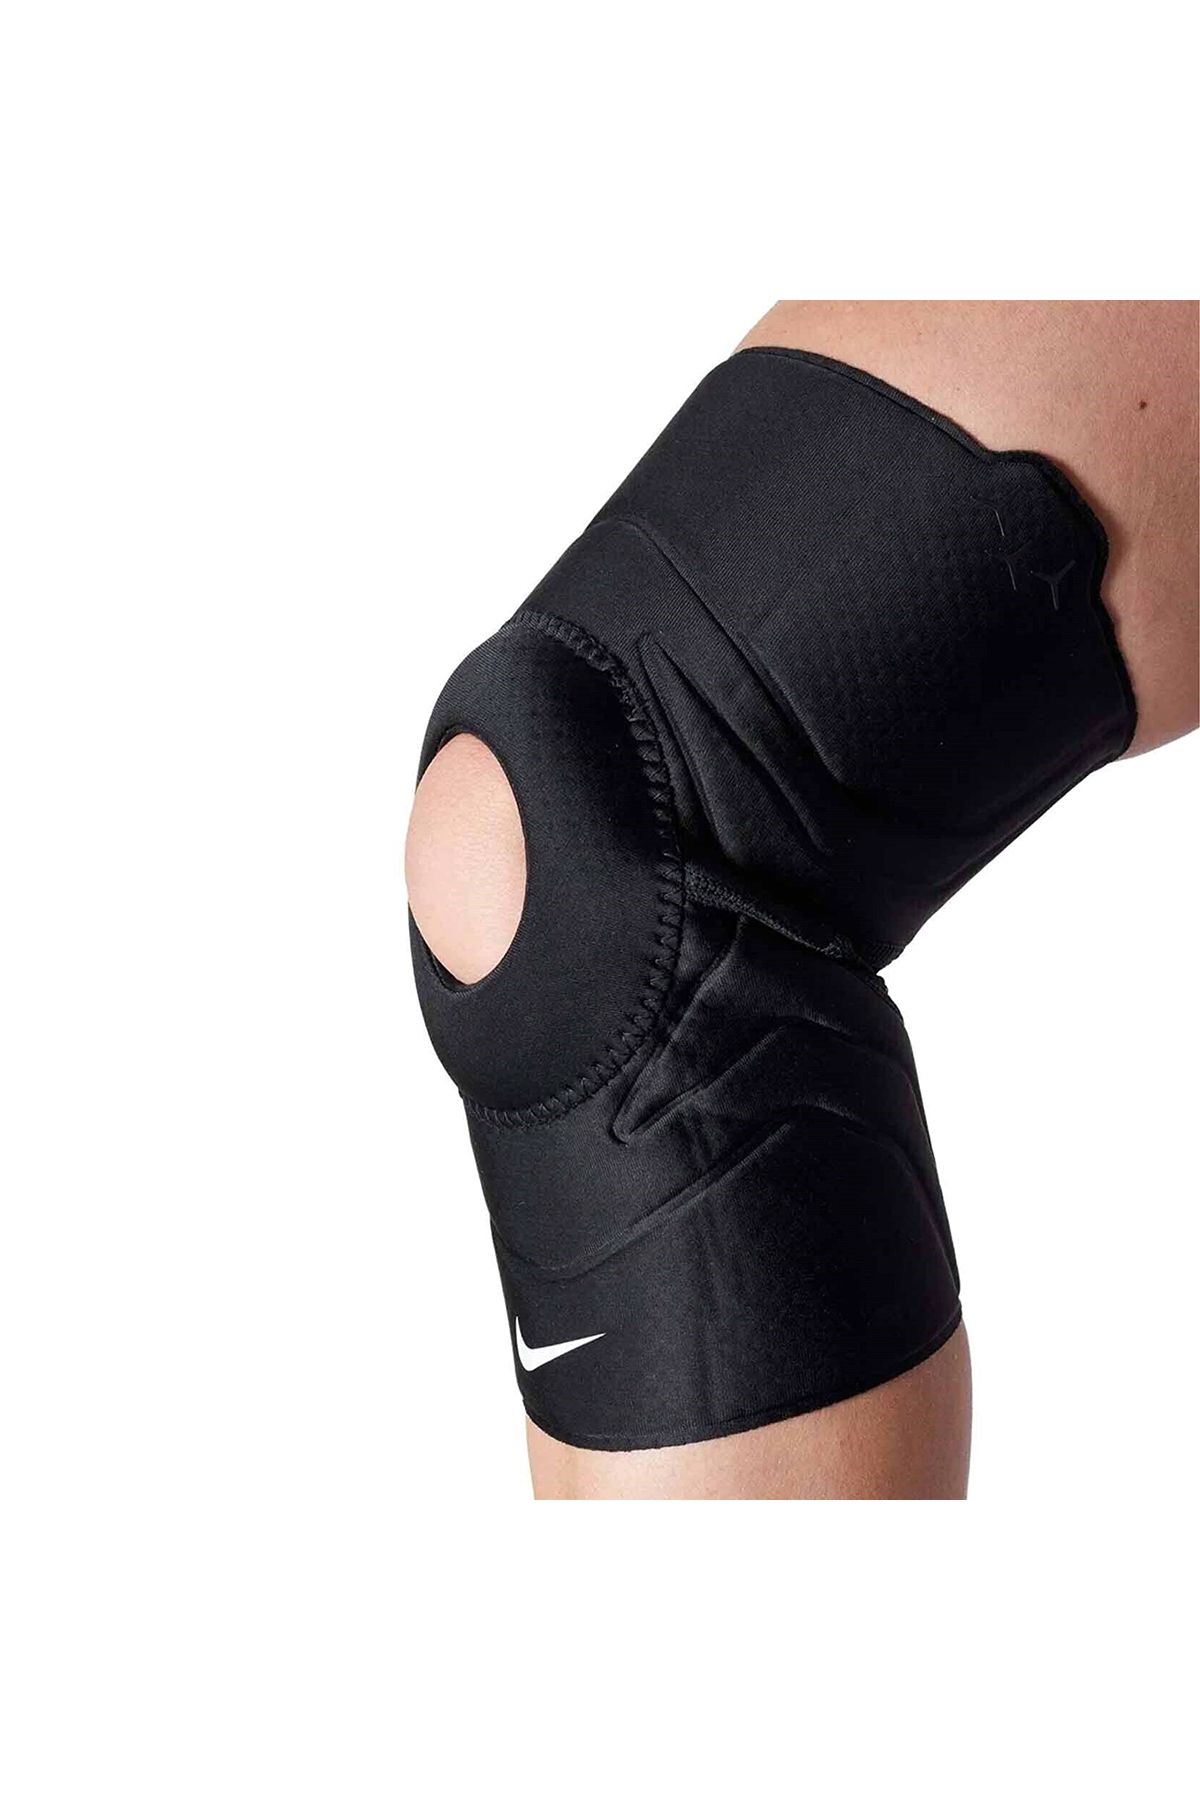 Nike Pro Open Patella Knee Sleeve 3.0 Unisex Siyah Antrenman Dizlik N.100.0675.010.LG